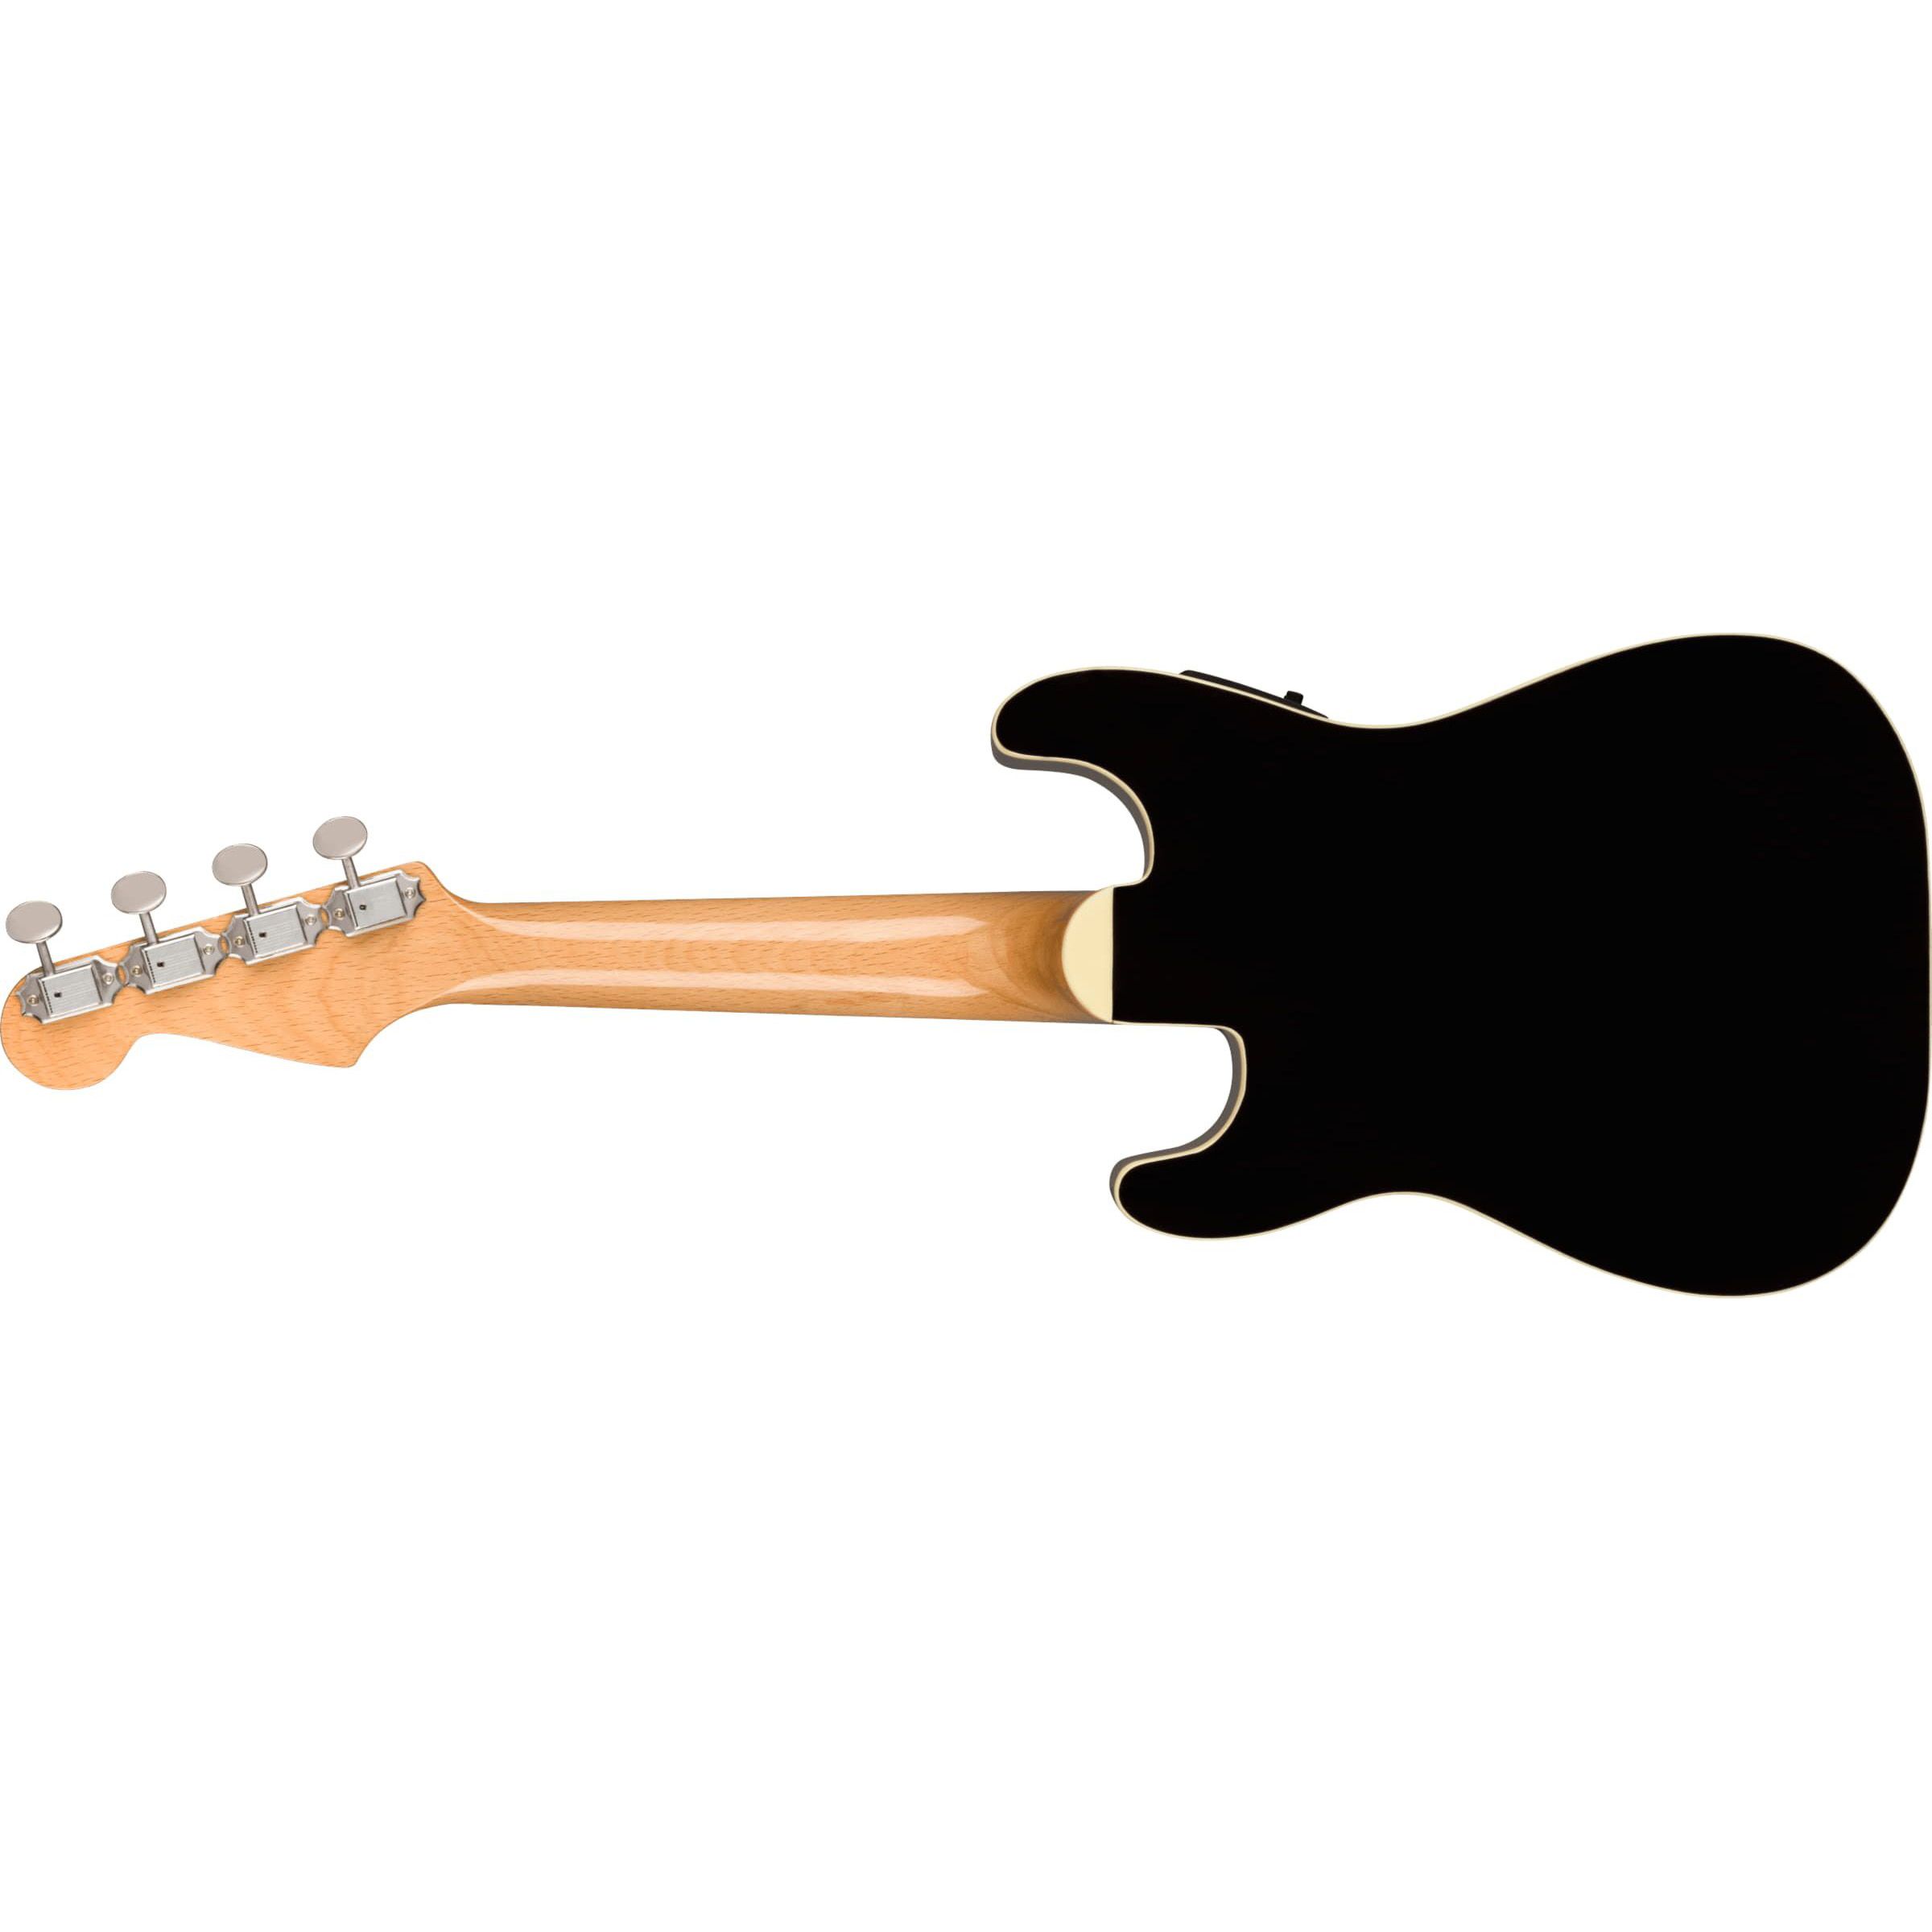 Fender Fullerton Strat Uke Black Народные инструменты